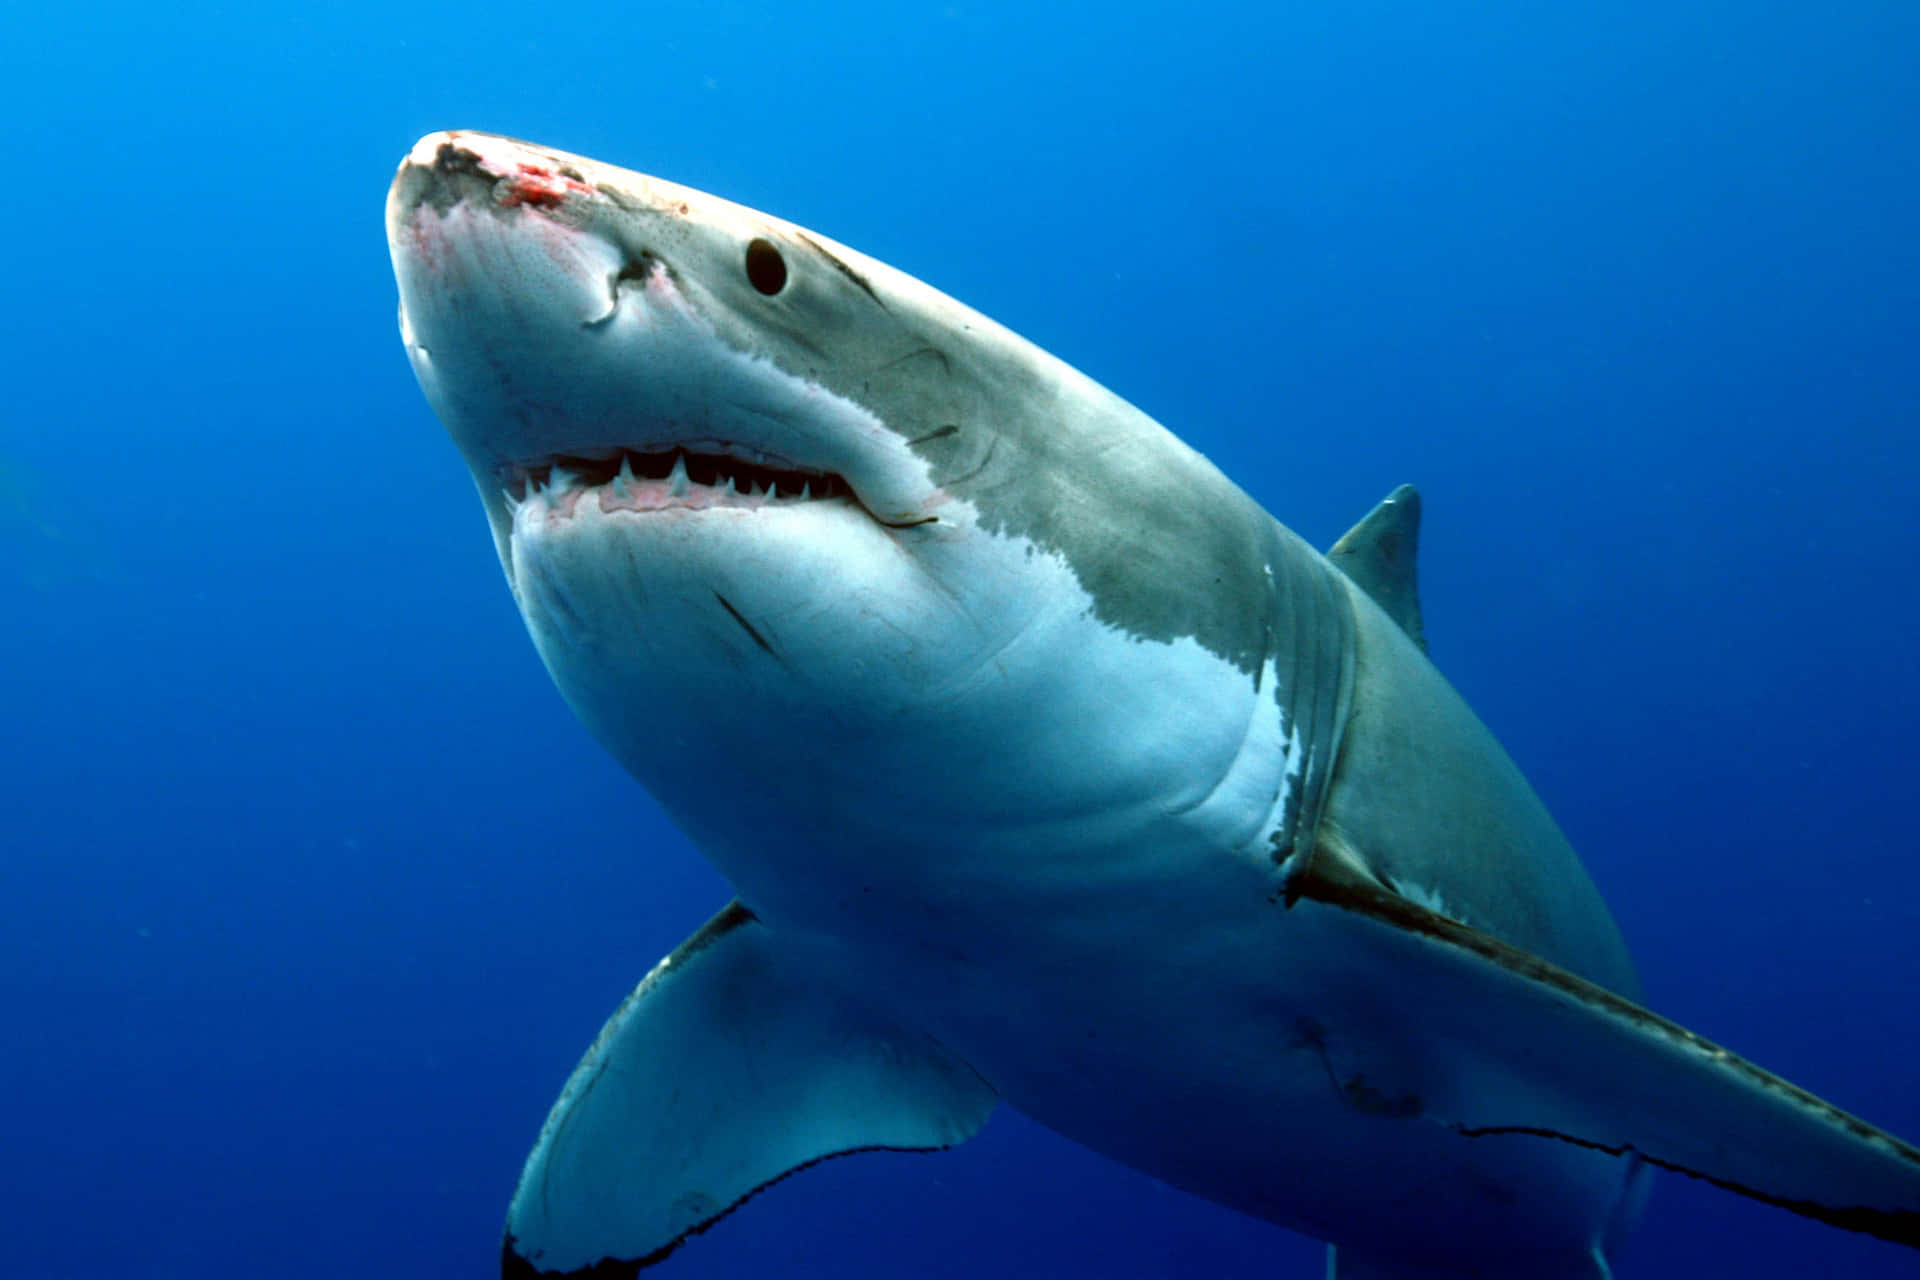 "Sea predator - the majestic Great White Shark"